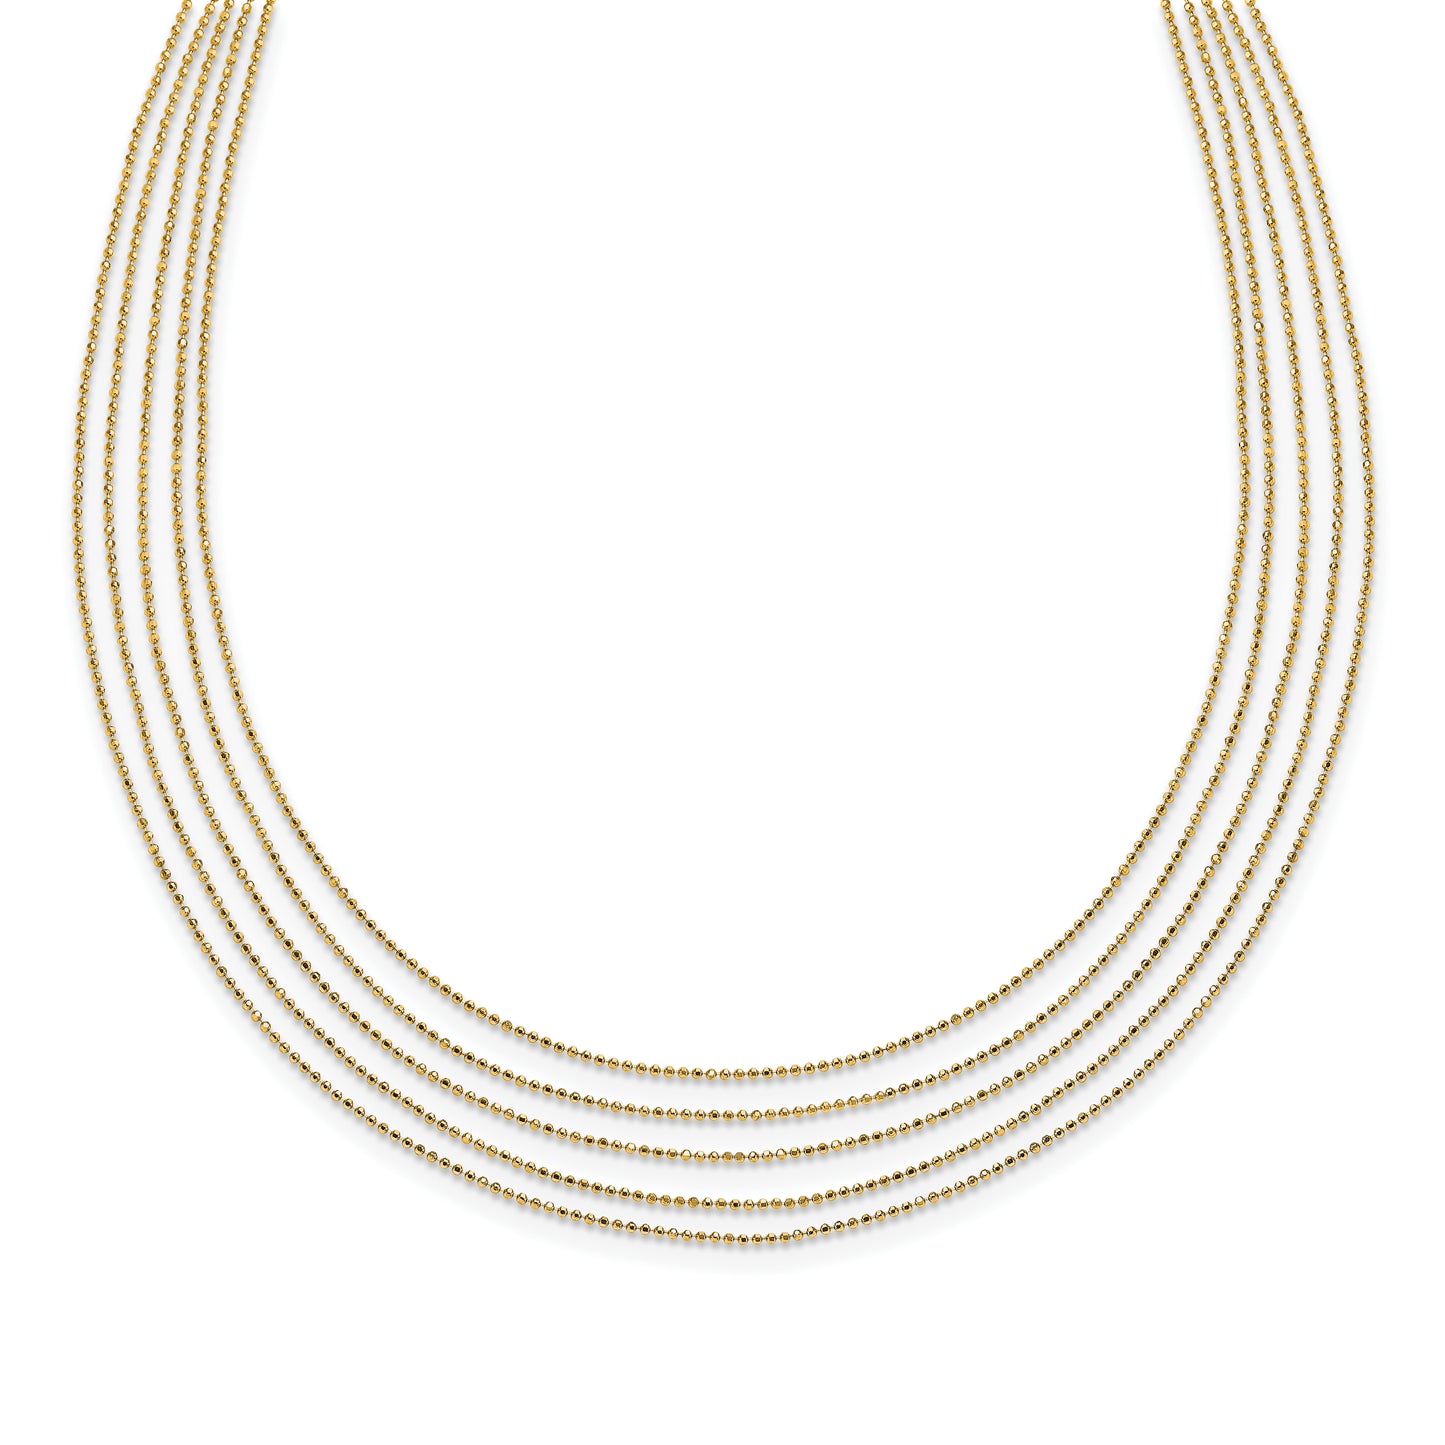 Leslie's 14K Polished Multi-layered Necklace